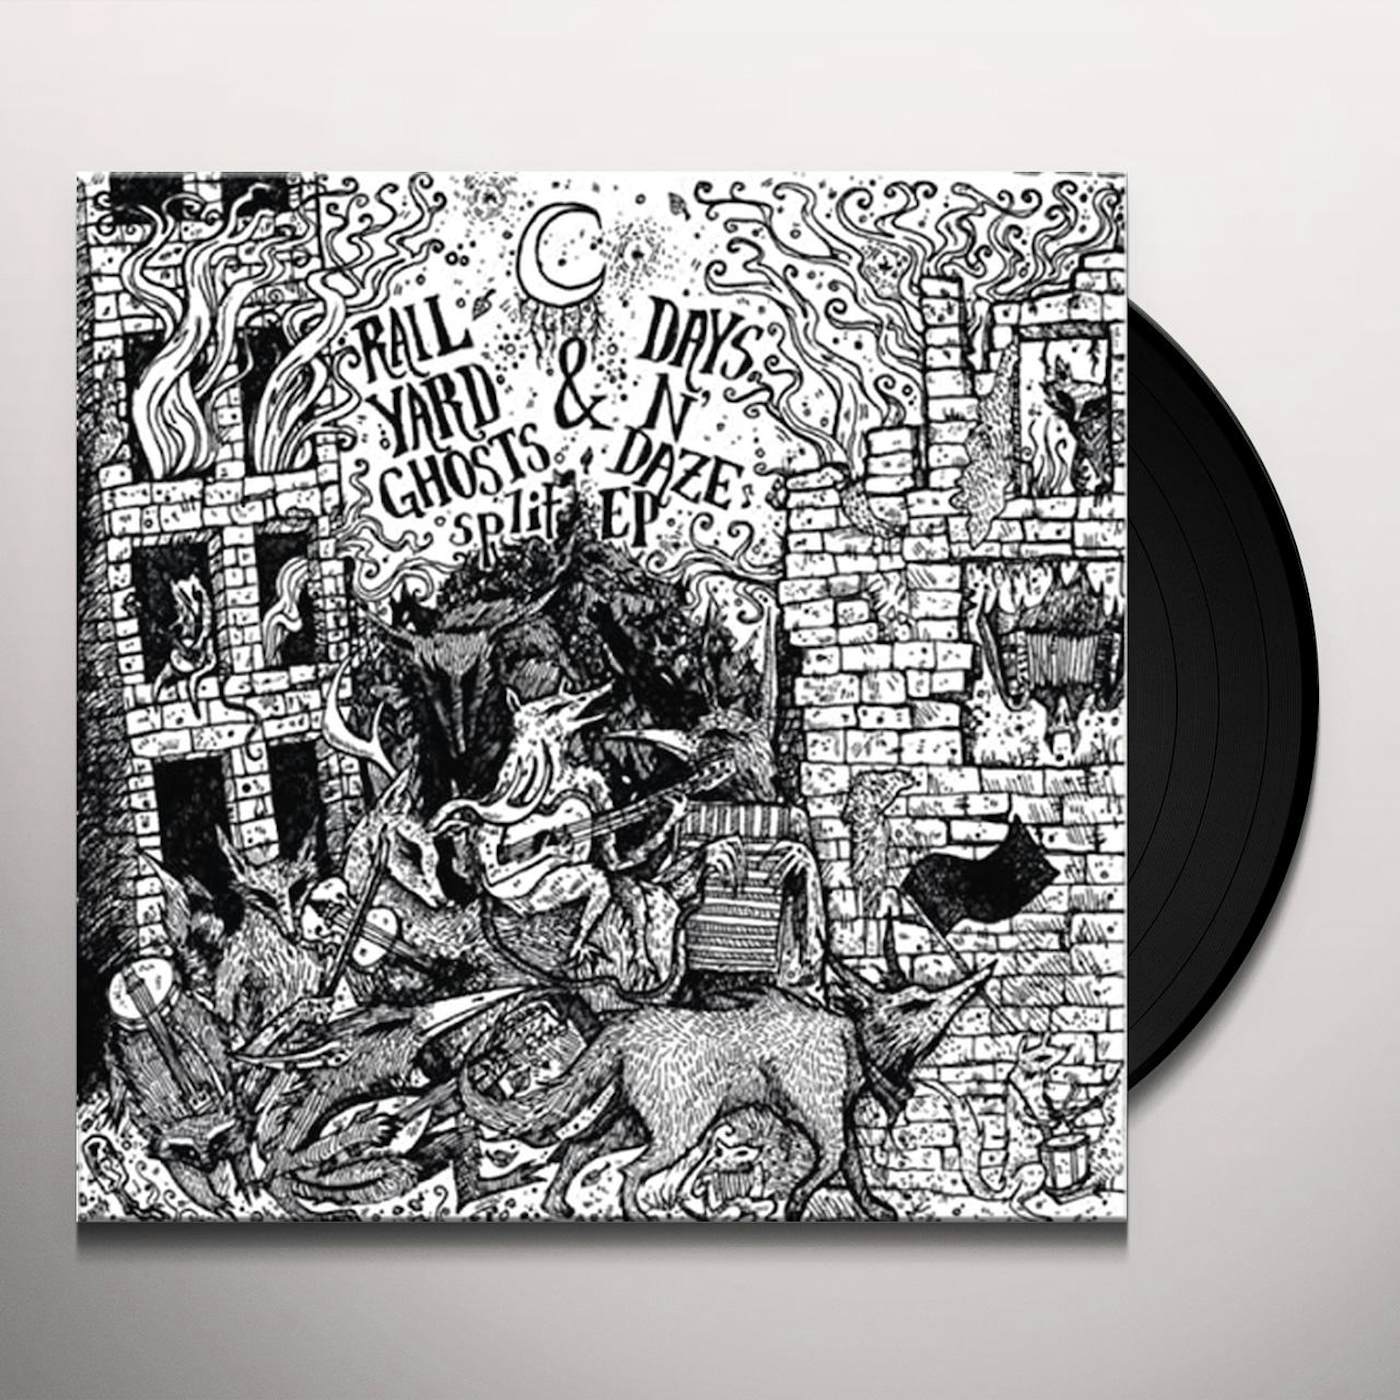 Rail Yard Ghosts/Days N' Daze Vinyl Record